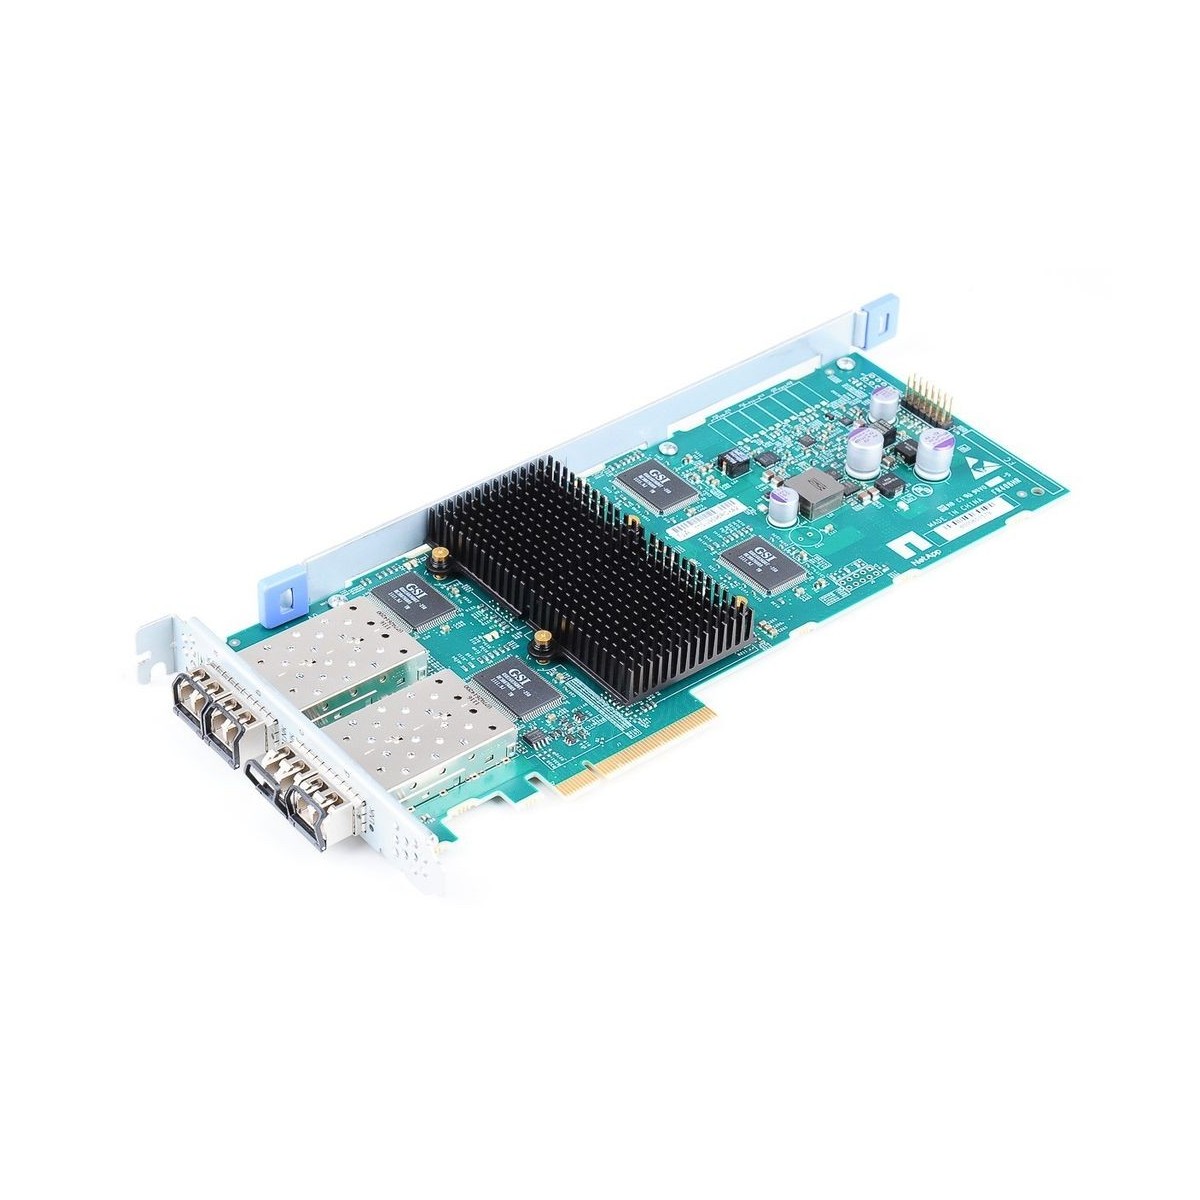 NETAPP 4-PORT 10GB/S PCI-E HBA ADAPTER +4xGBIC